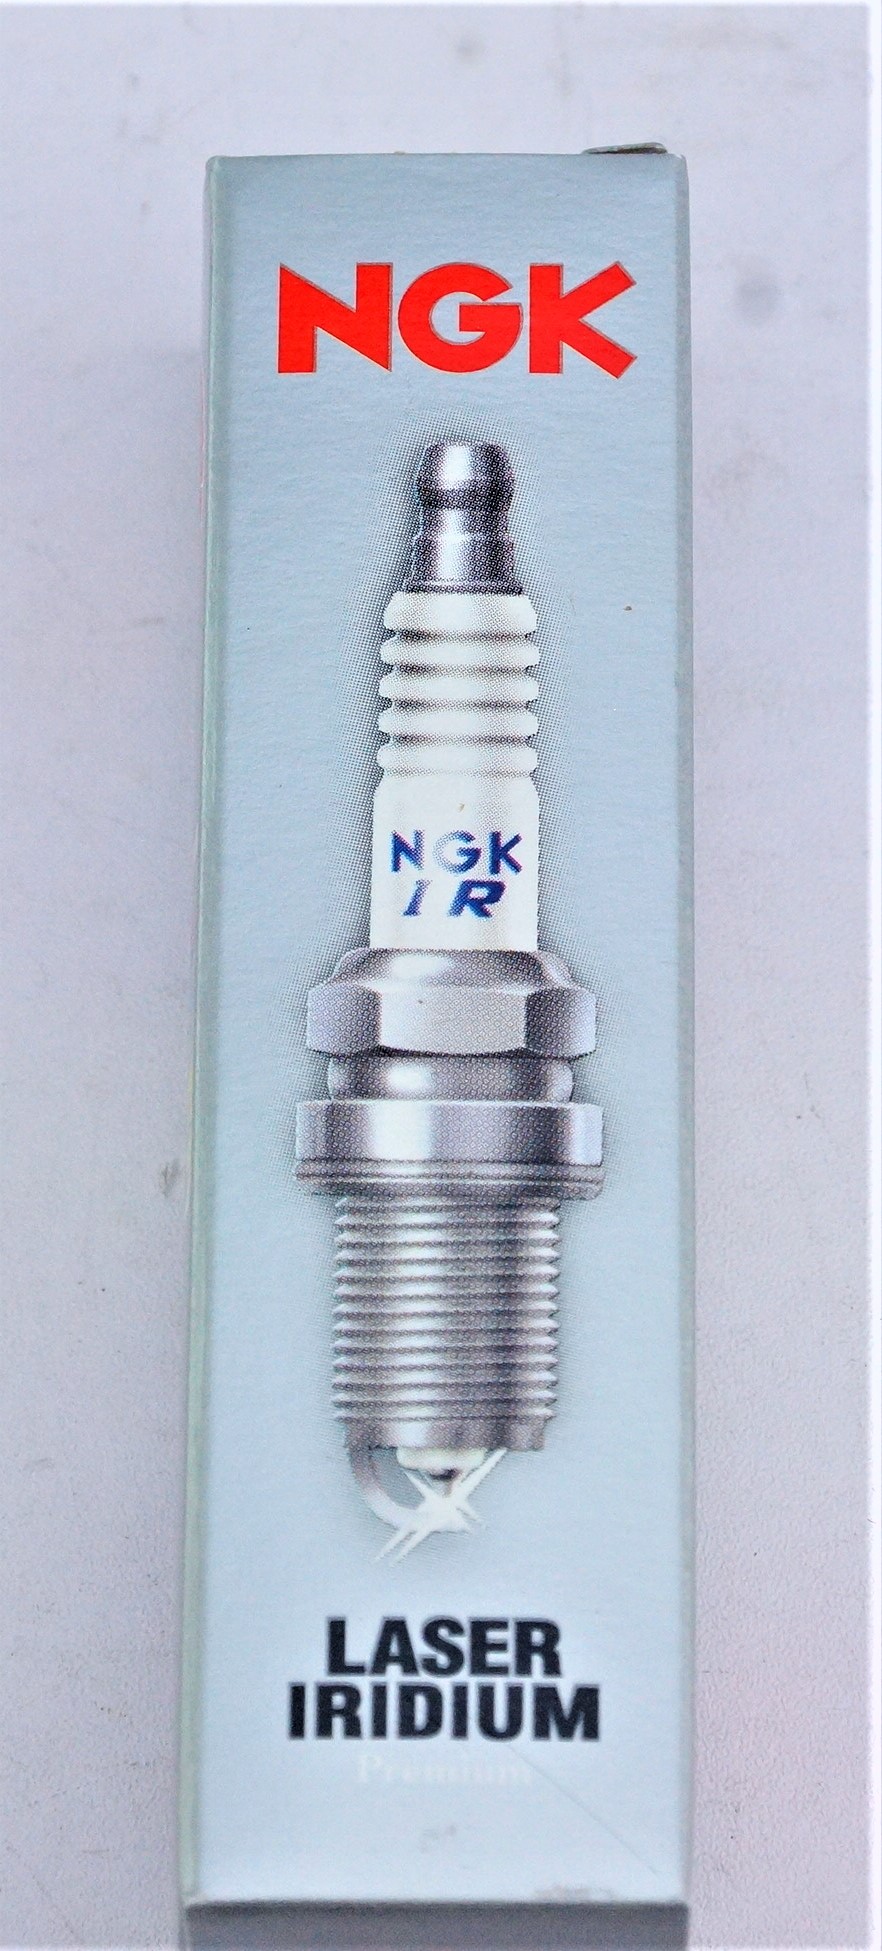 Pack of 8 - New Genuine NGK 92145 Laser Iridium Spark Plug Fast Free Shipping - image 10